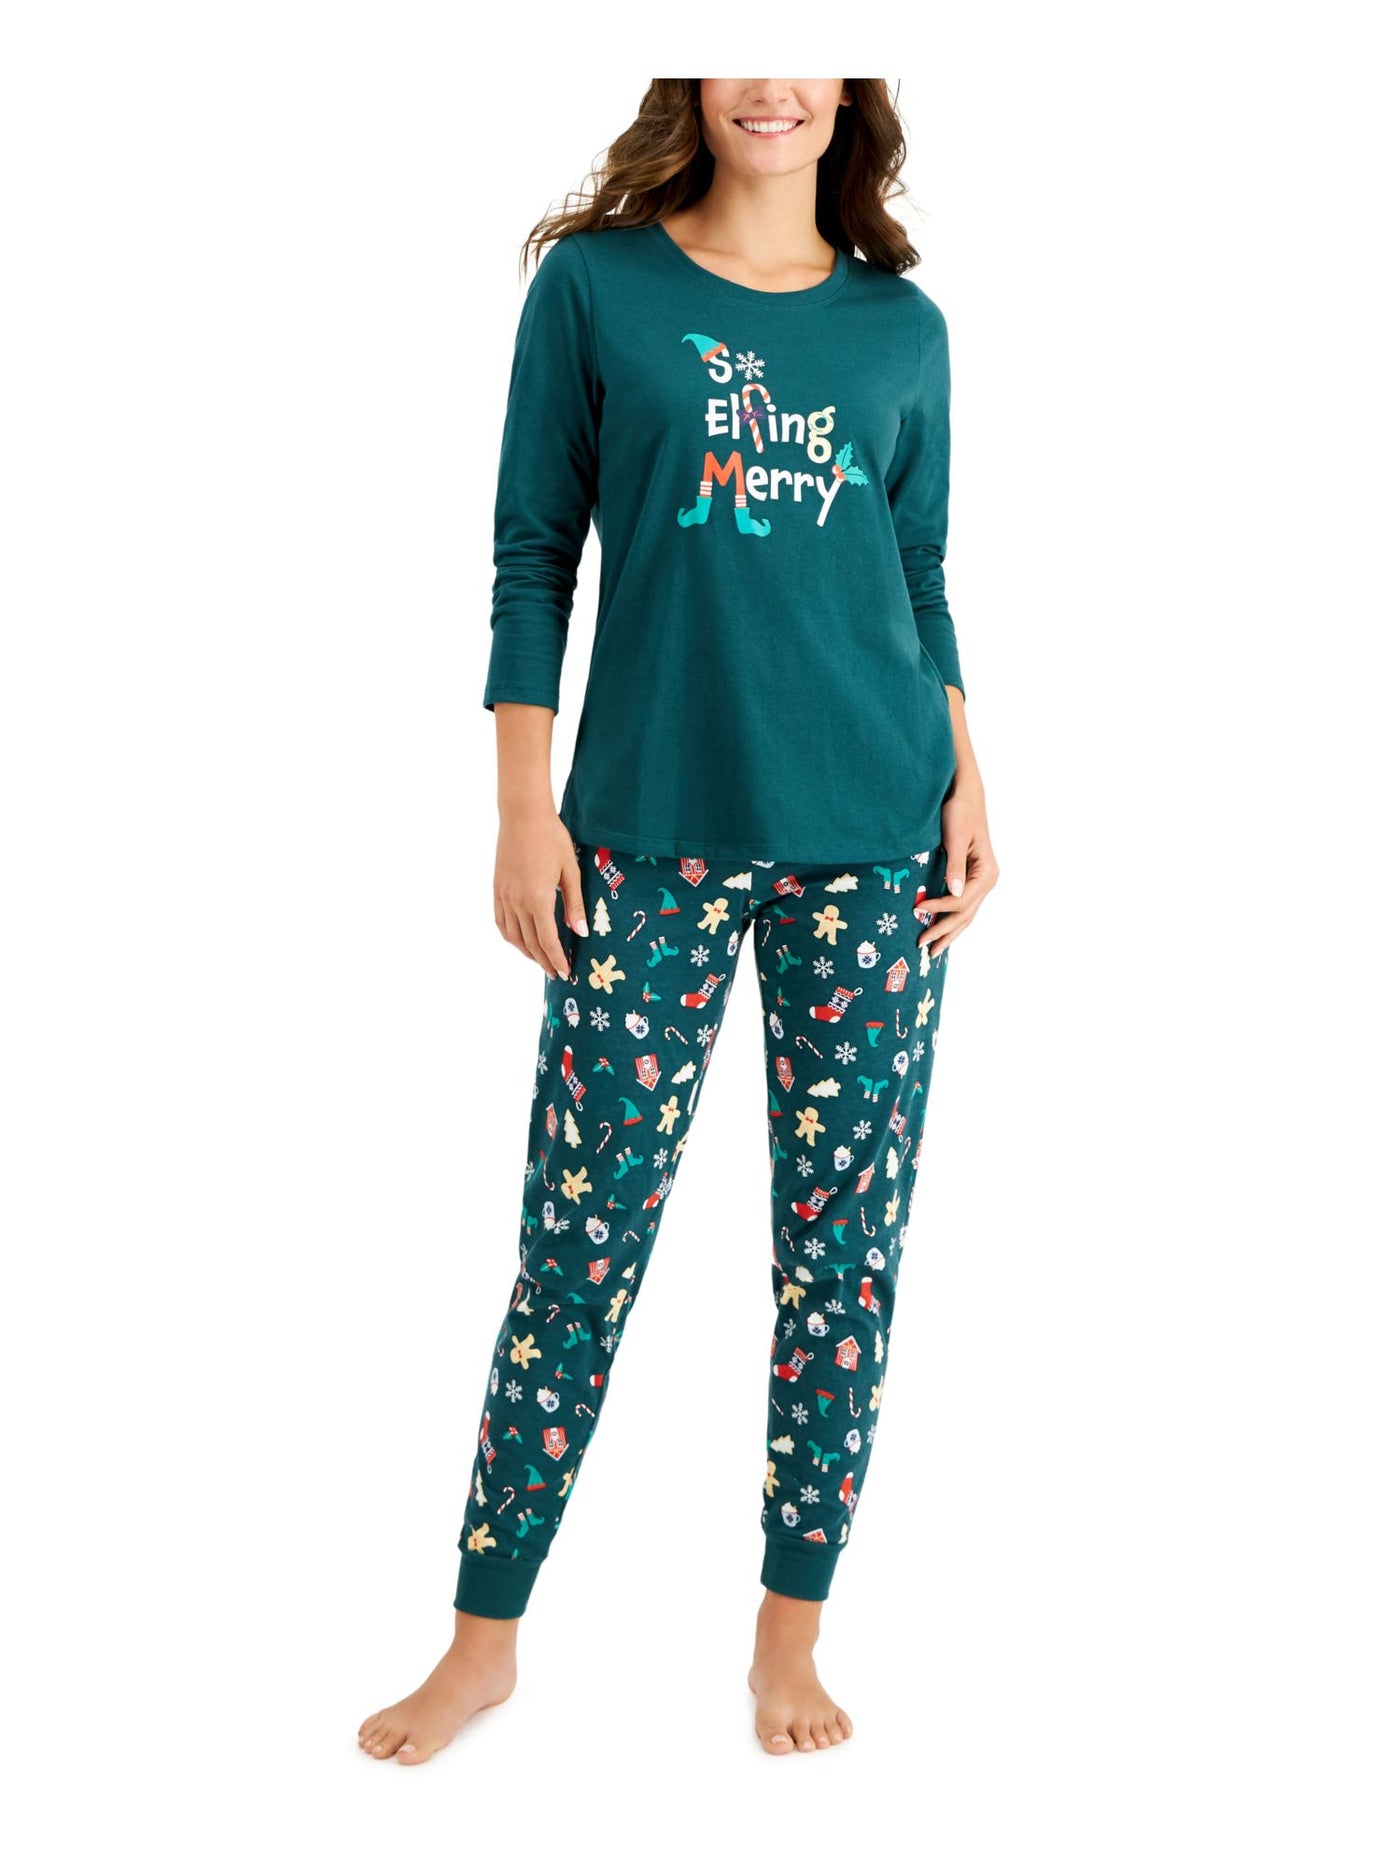 FAMILY PJs Womens Green Graphic Comfort Long Sleeve T-Shirt Top Cuffed Pants Pajamas XL